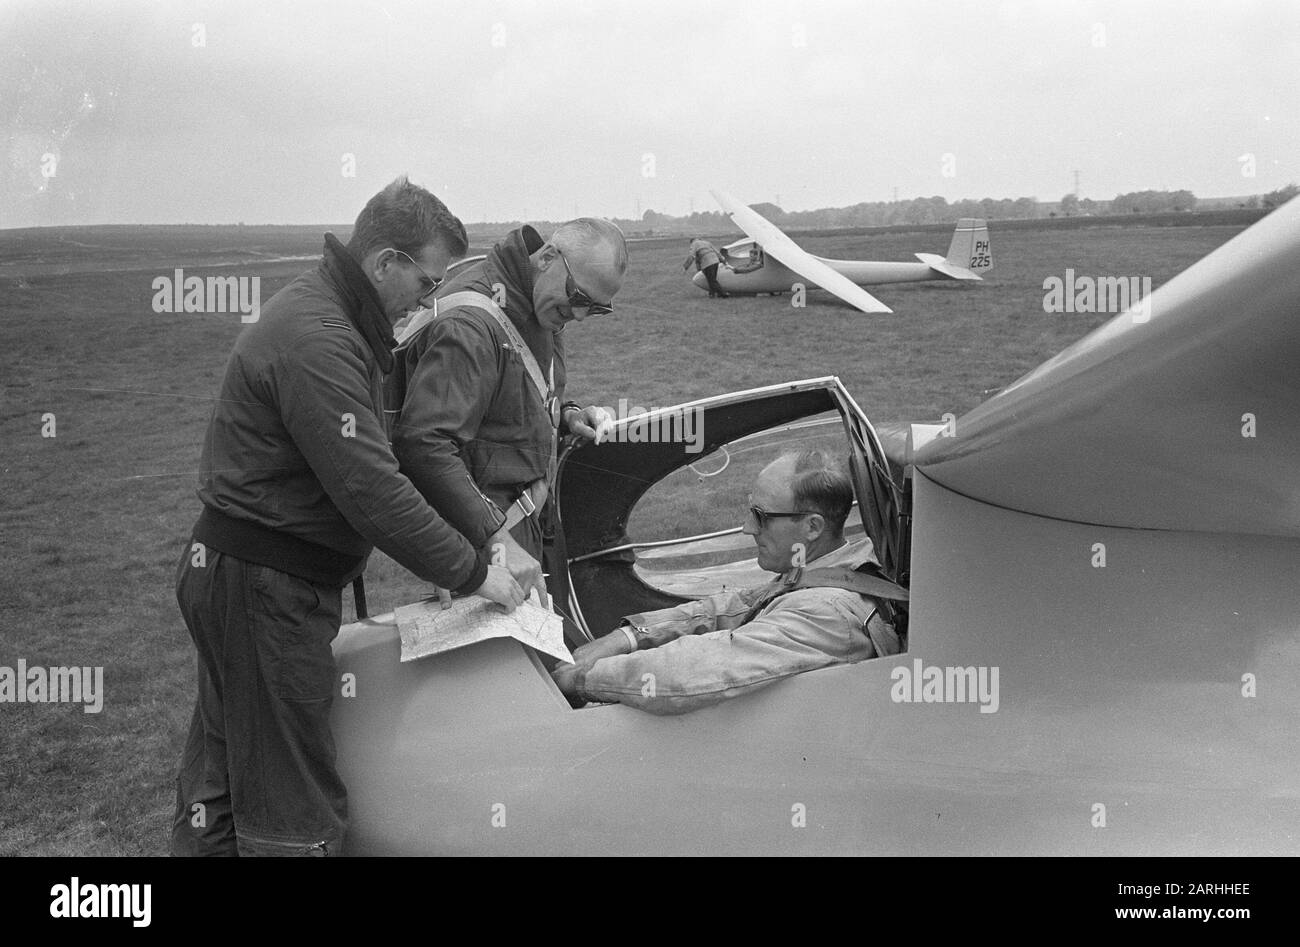 Gliding competition at Terlet, Van Bree, Father Bernse and R. Breunissen Date: May 29, 1962 Location: Gelderland, Terlet Personal name: Breunissen, R. Stock Photo